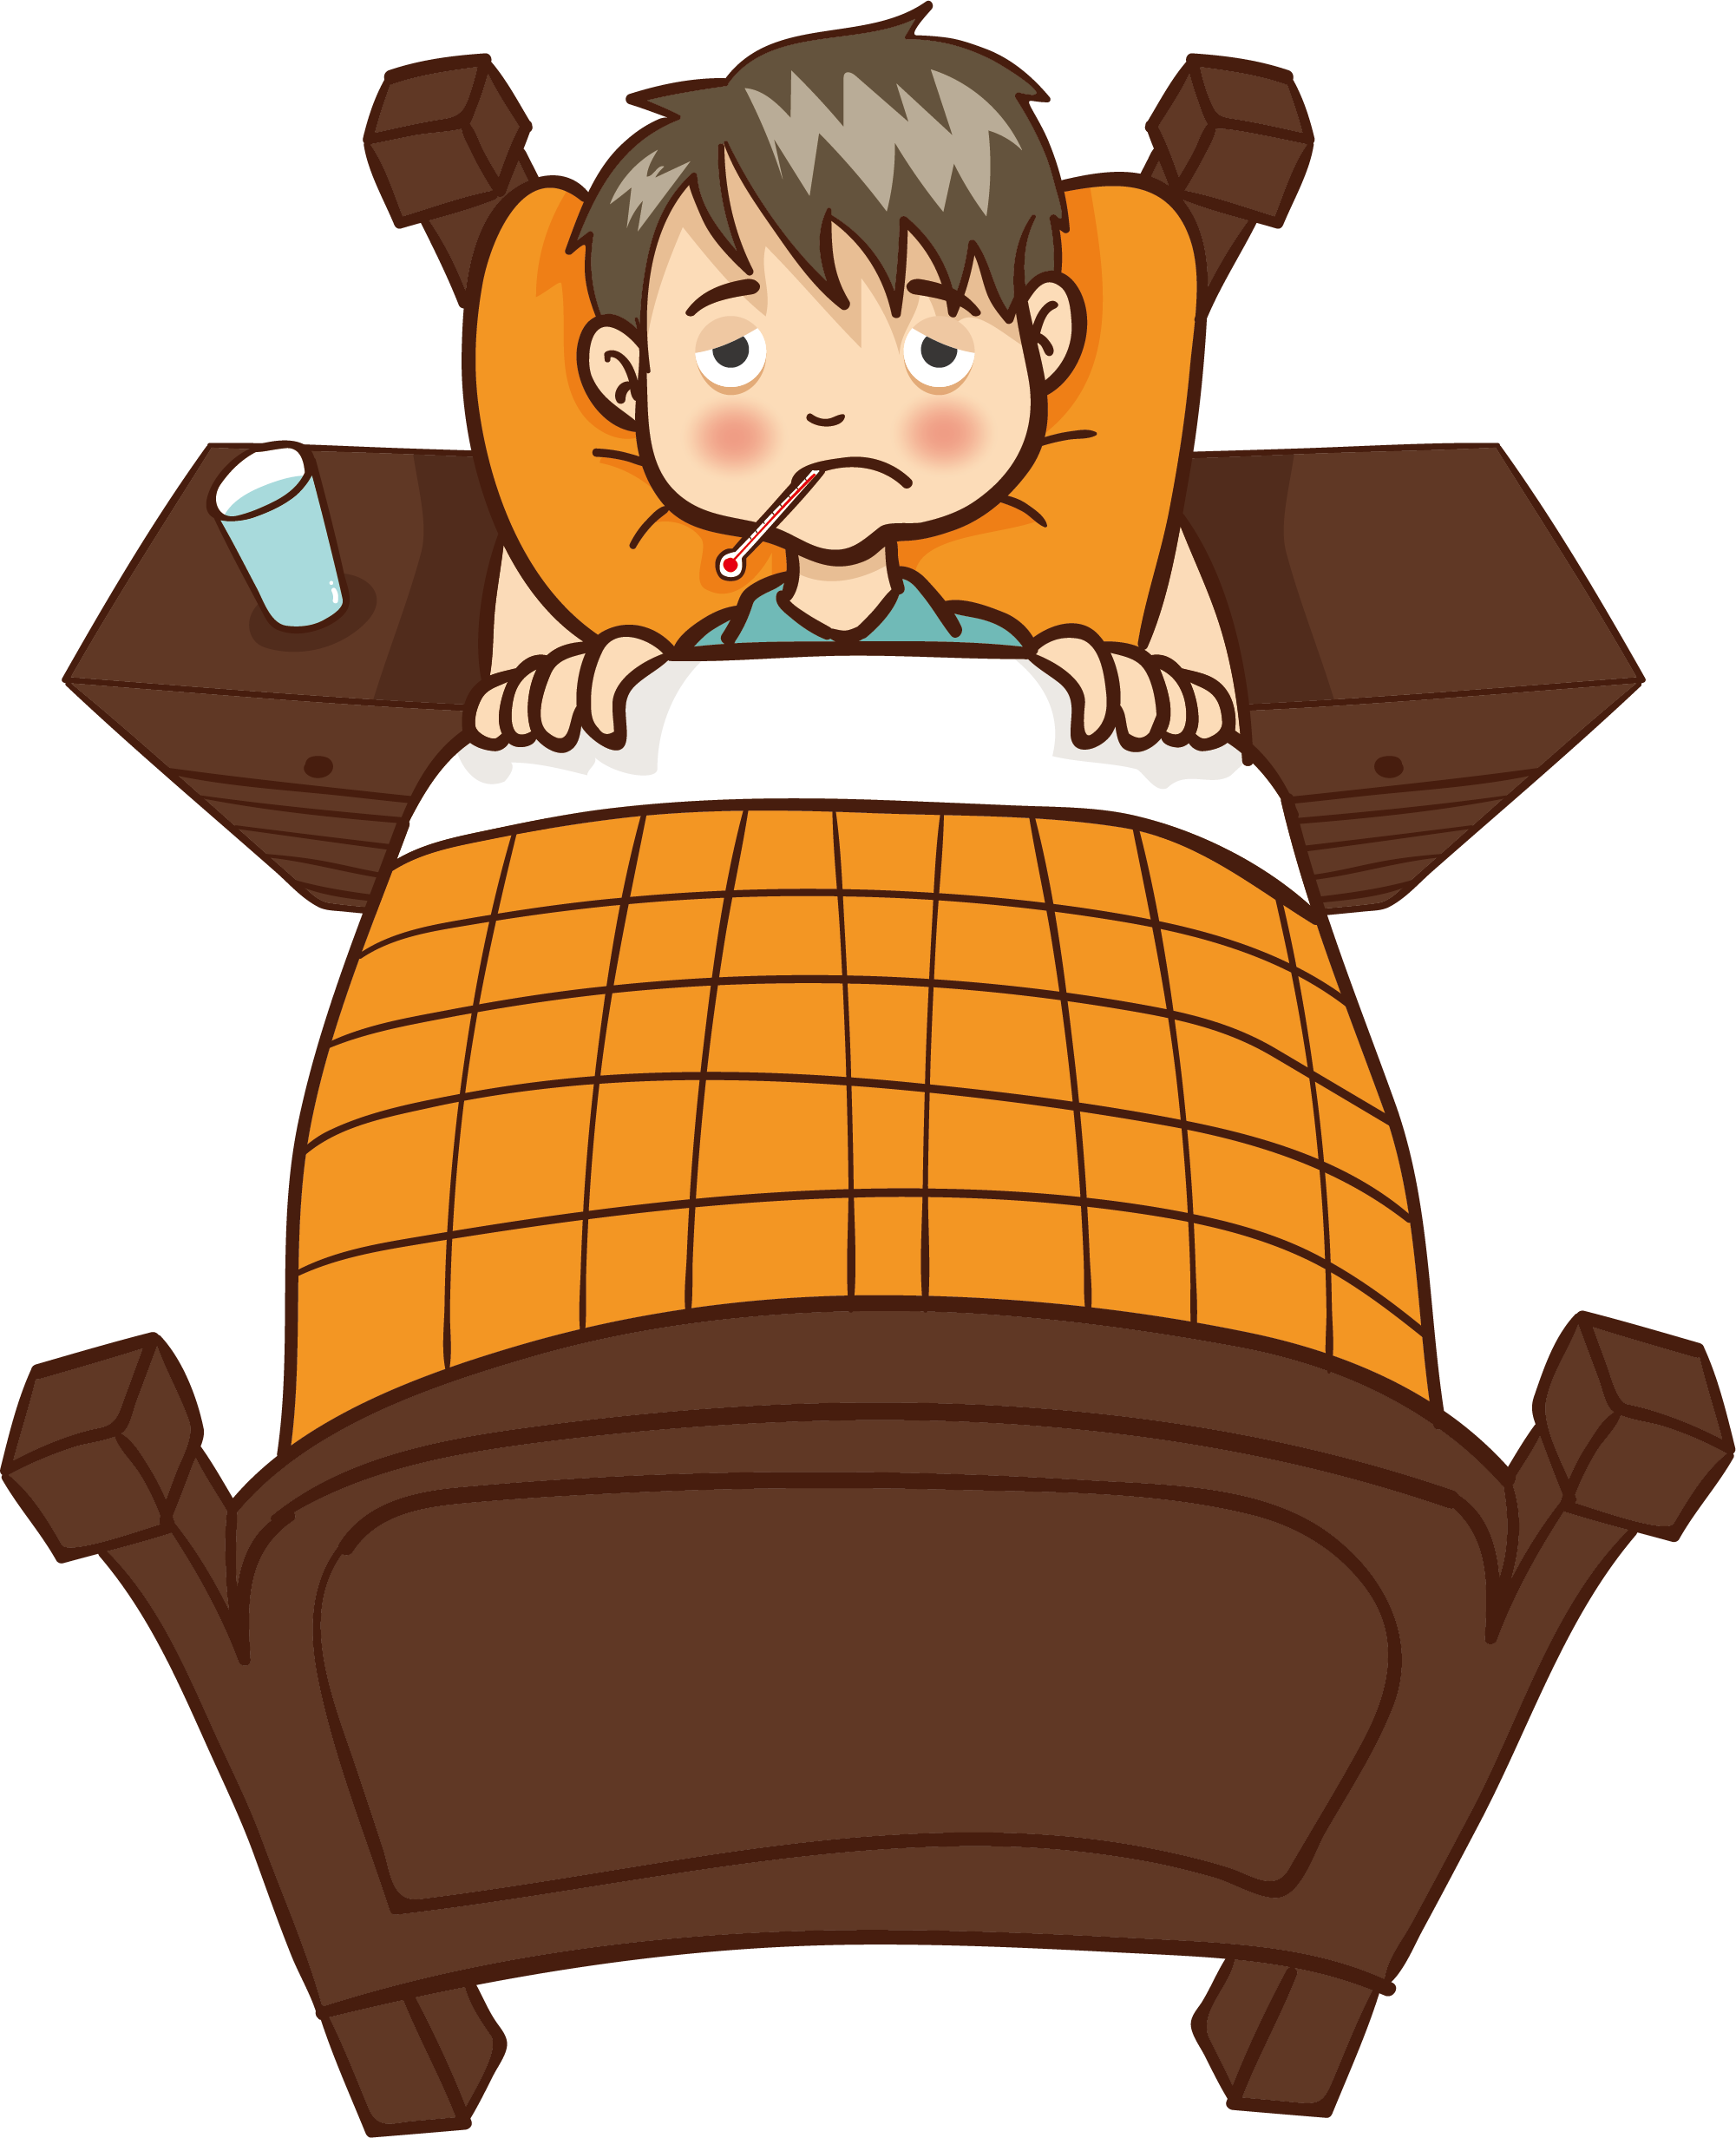 Sick Child Restingin Bed